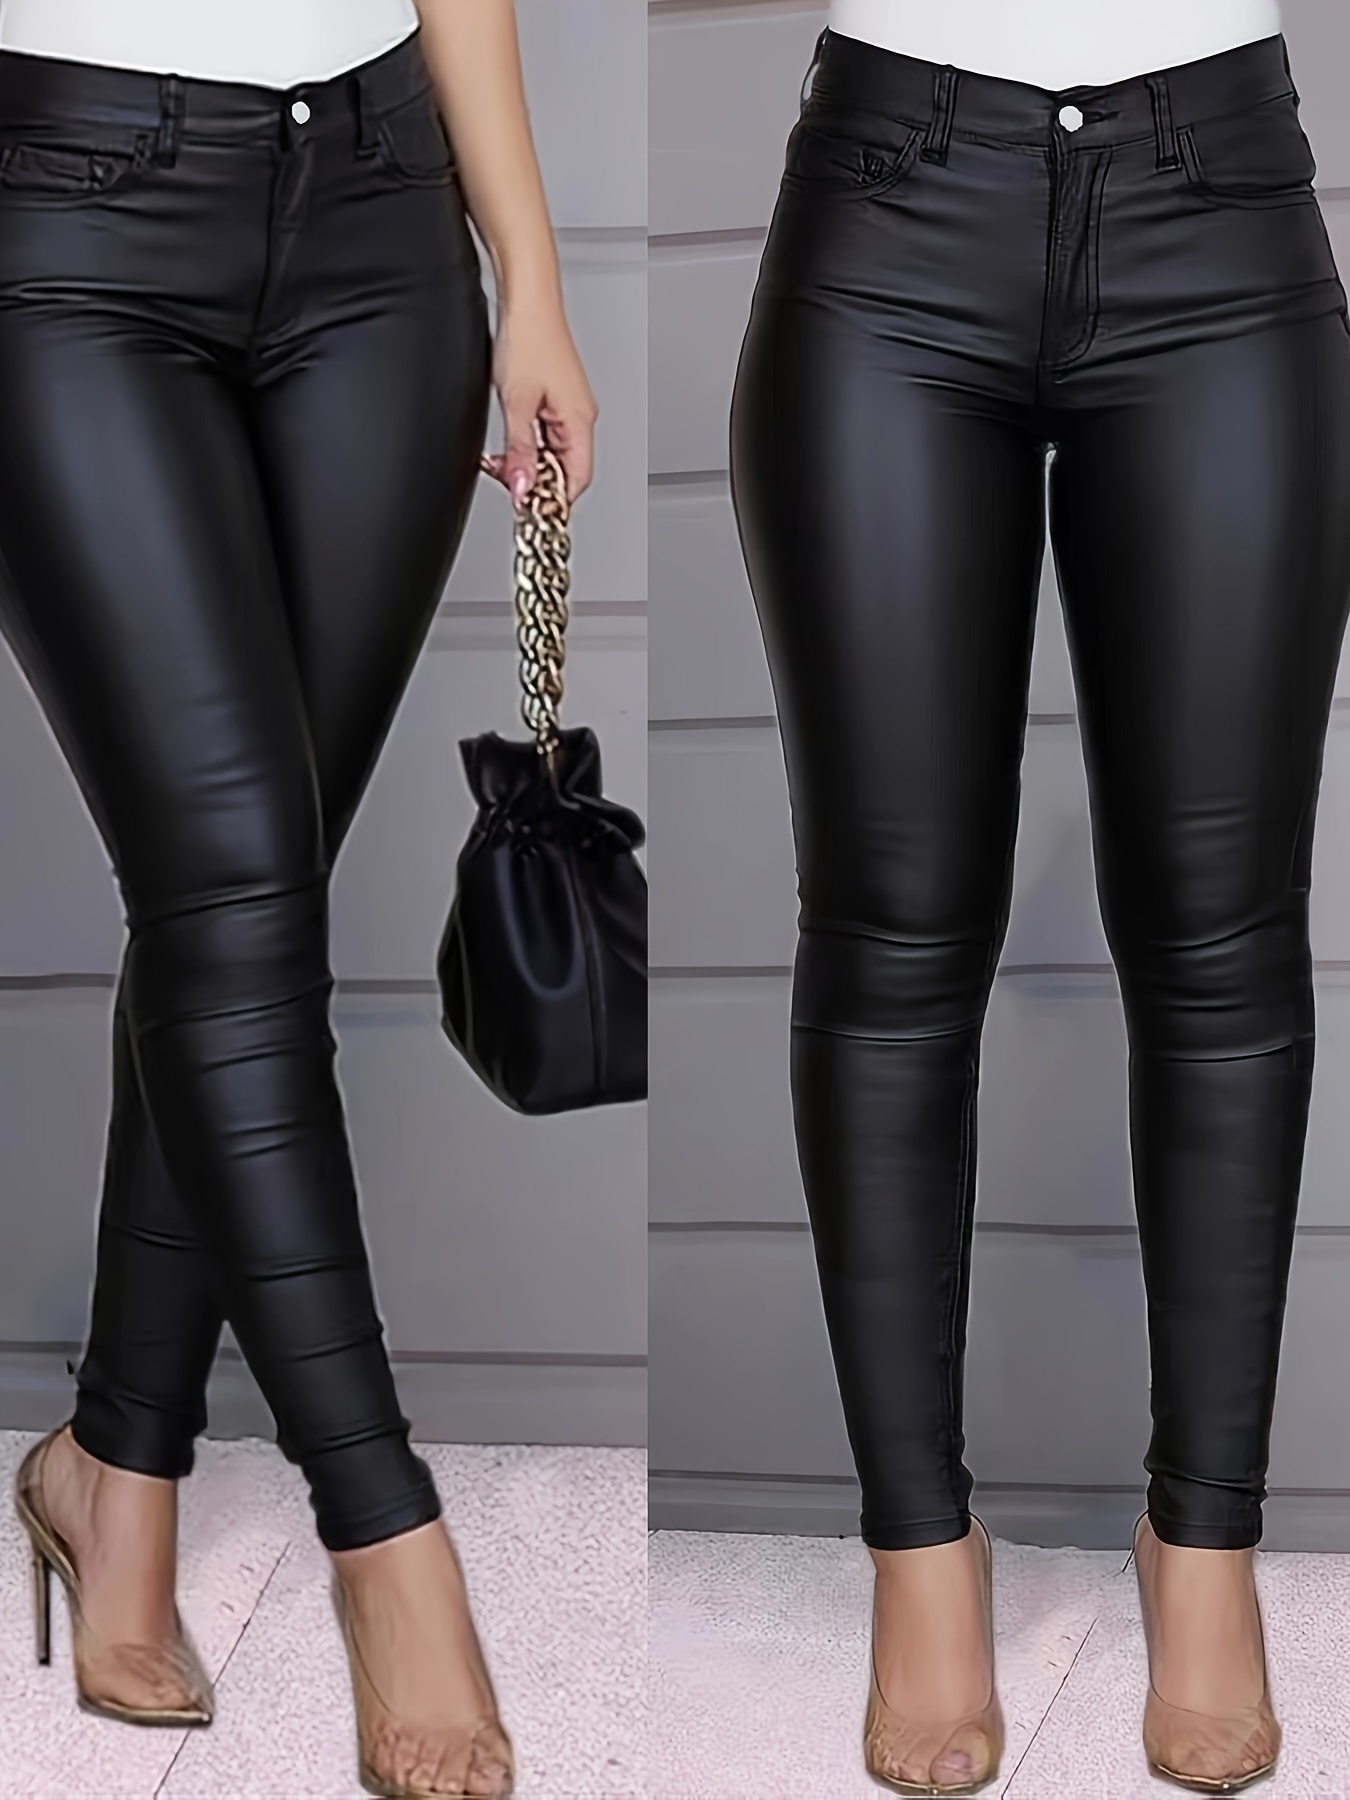 Woman Jeans Pants Black High Waist Elastic Pants Tight Skinny